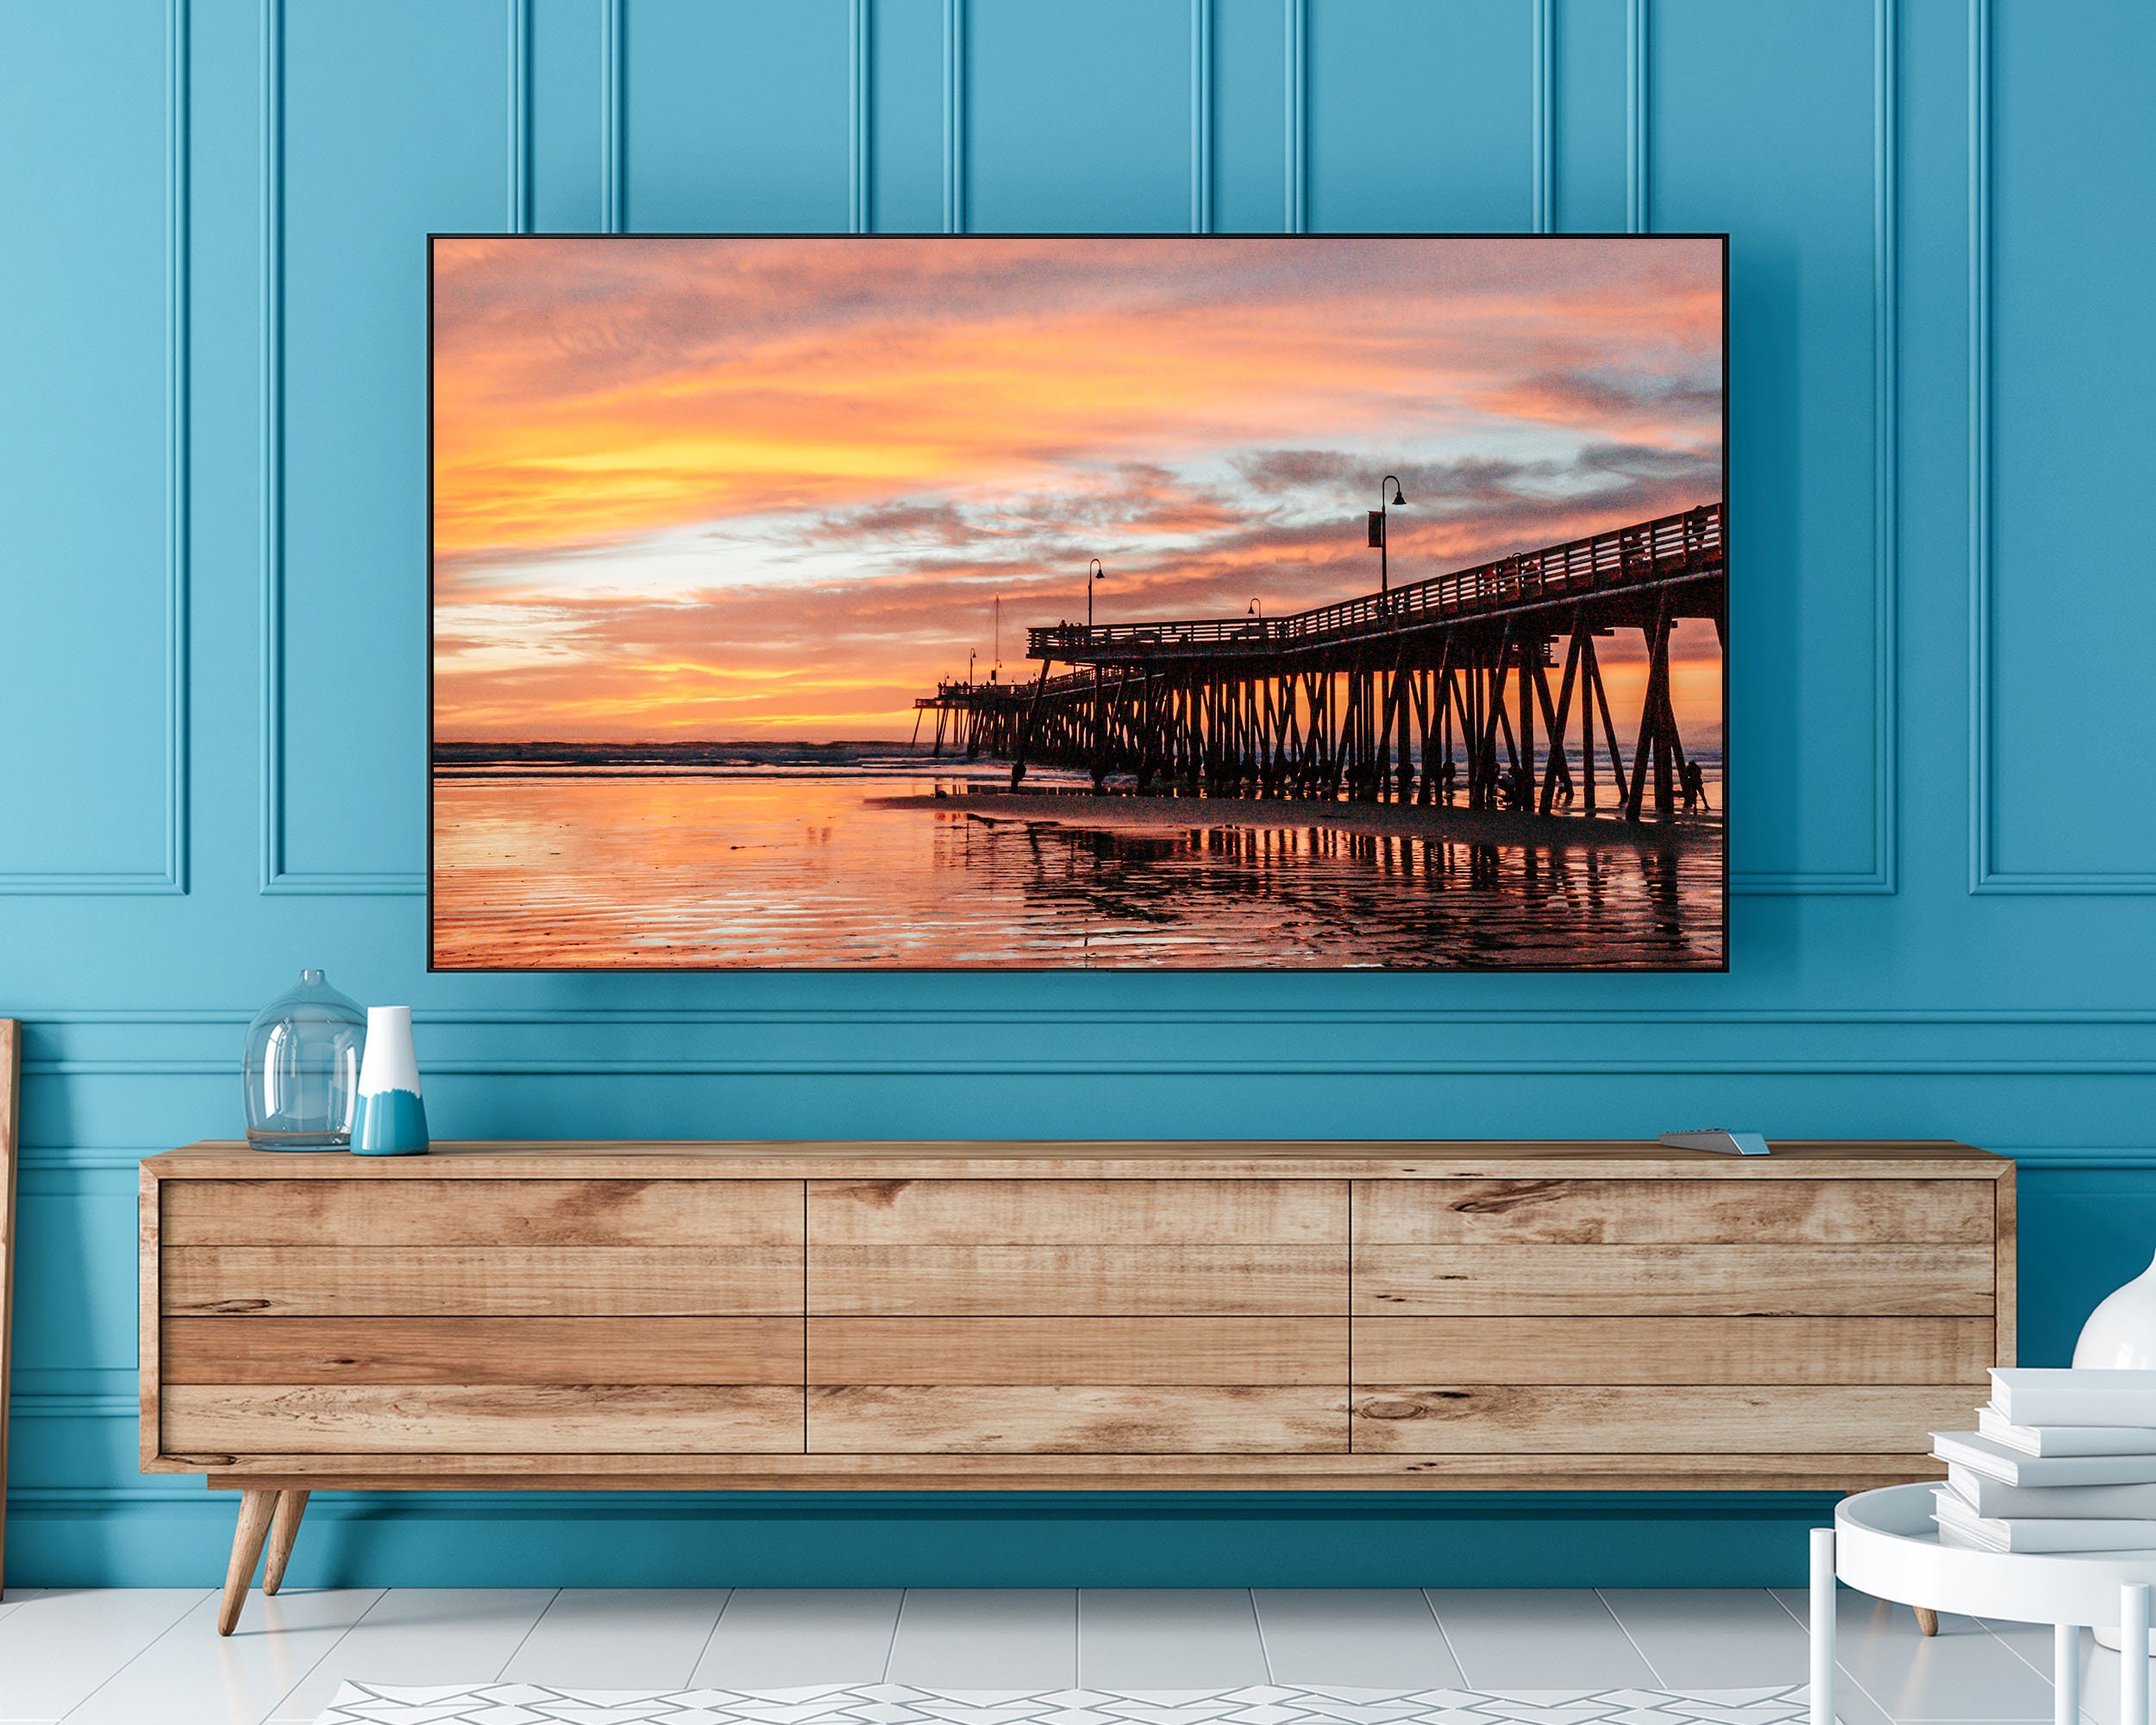 Samsung Frame TV Art Pismo Beach Pier at Sunset Images for | Etsy